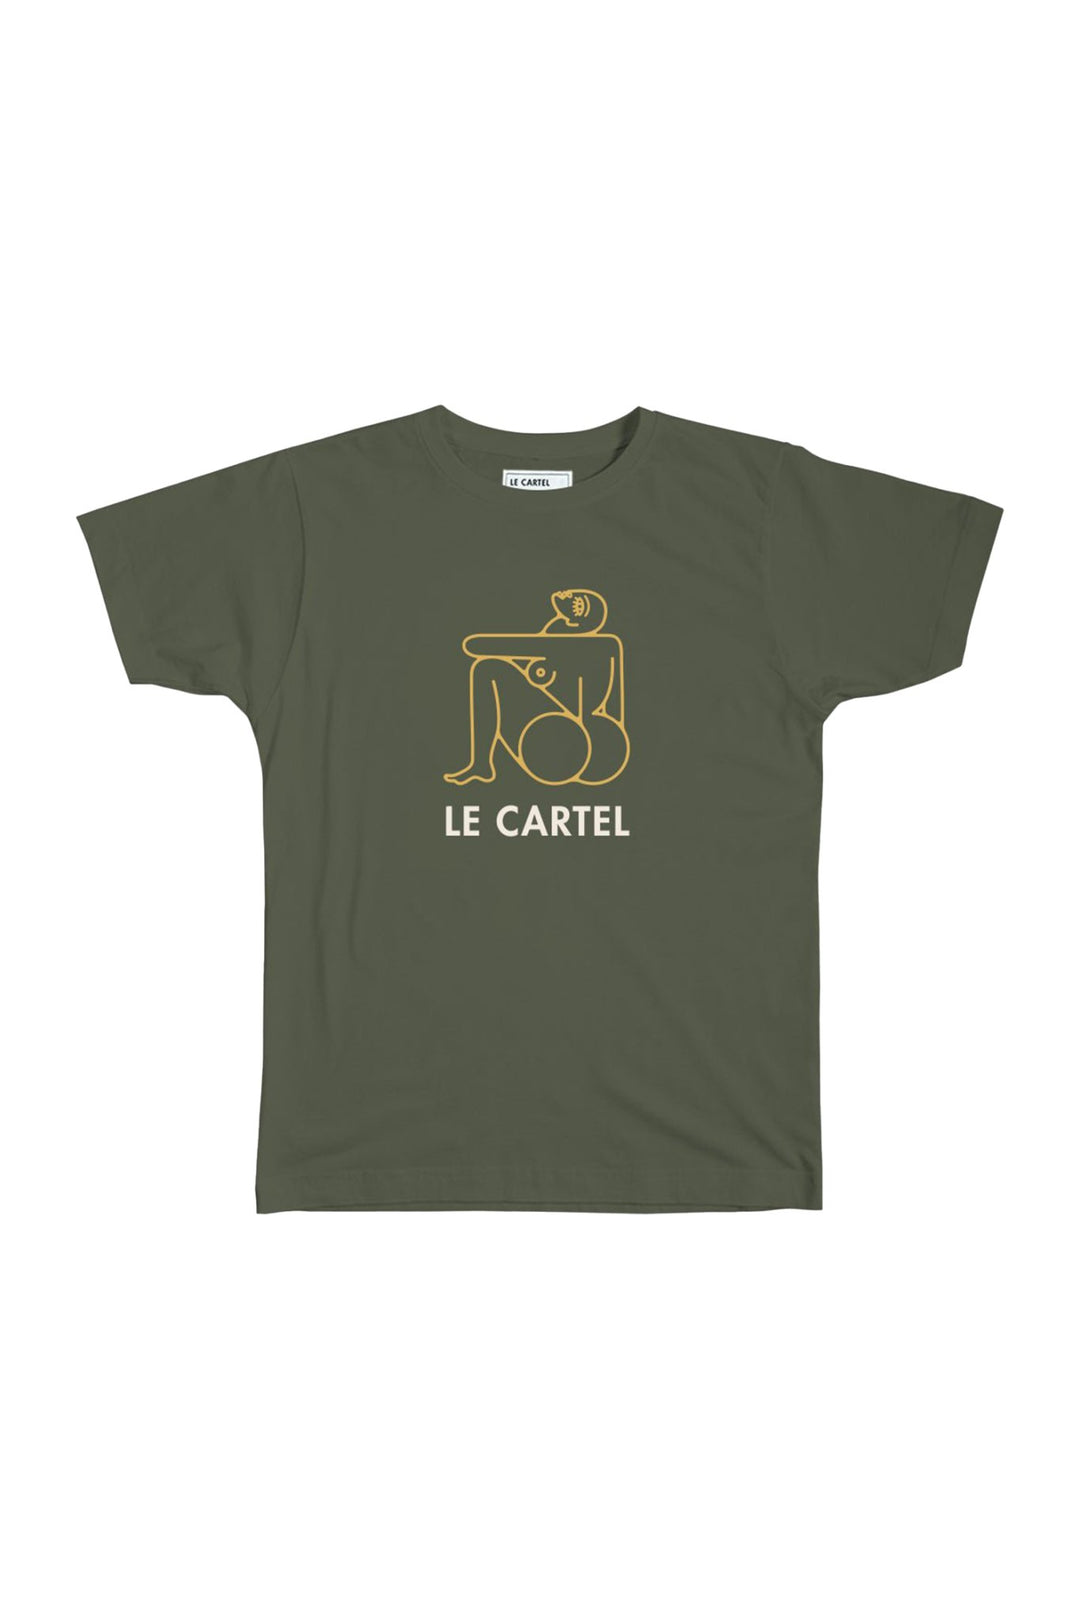 BOOTY CALL・T-shirt unisexe・Vert forêt - Le Cartel